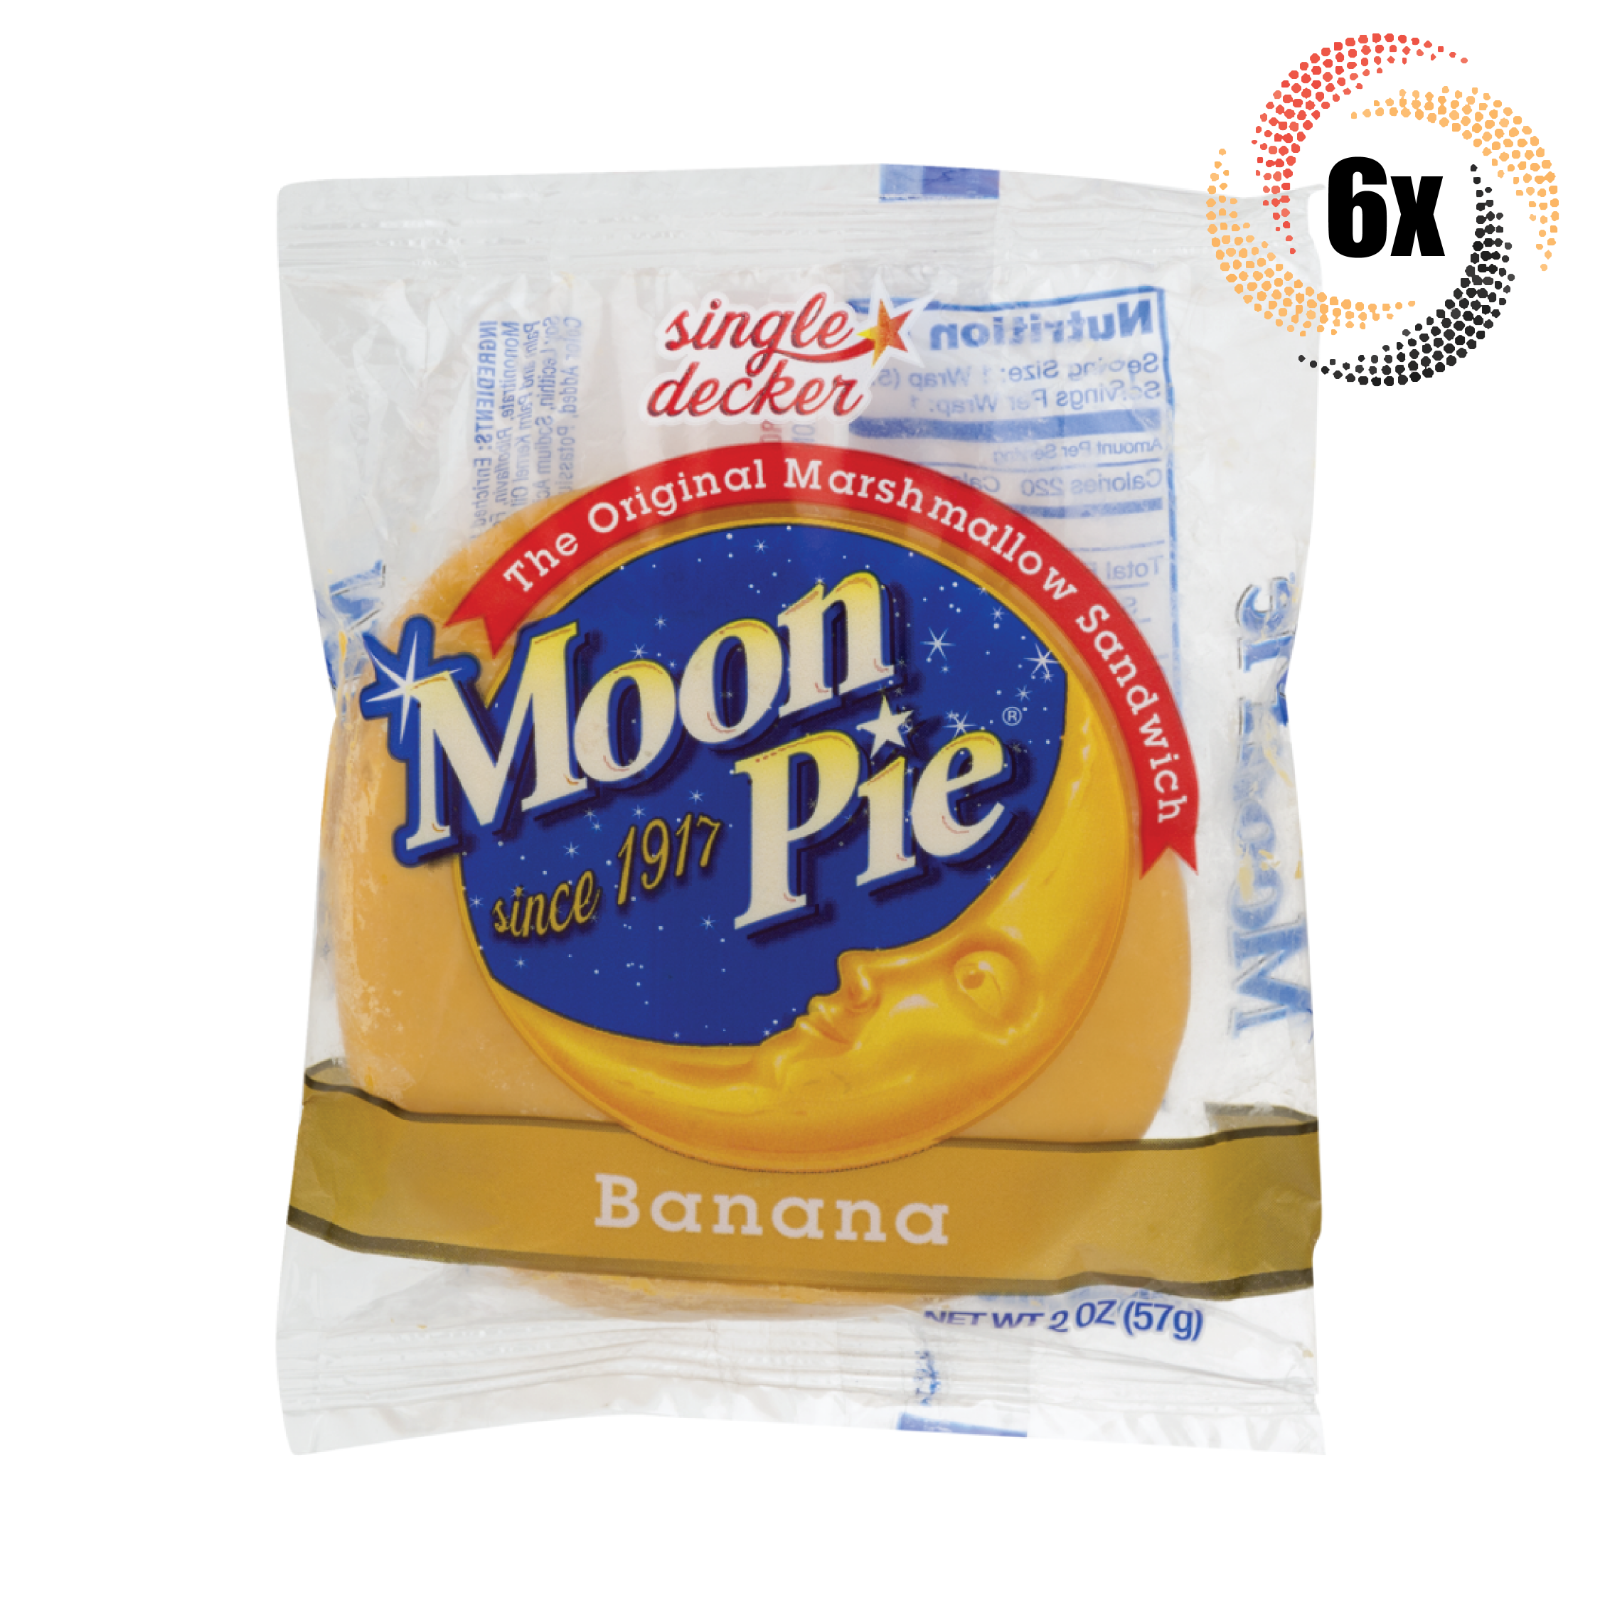 6x Pies Moon Pie Single Decker Banana Flavor Original Marshmallow Sandwiches 2oz - $13.52